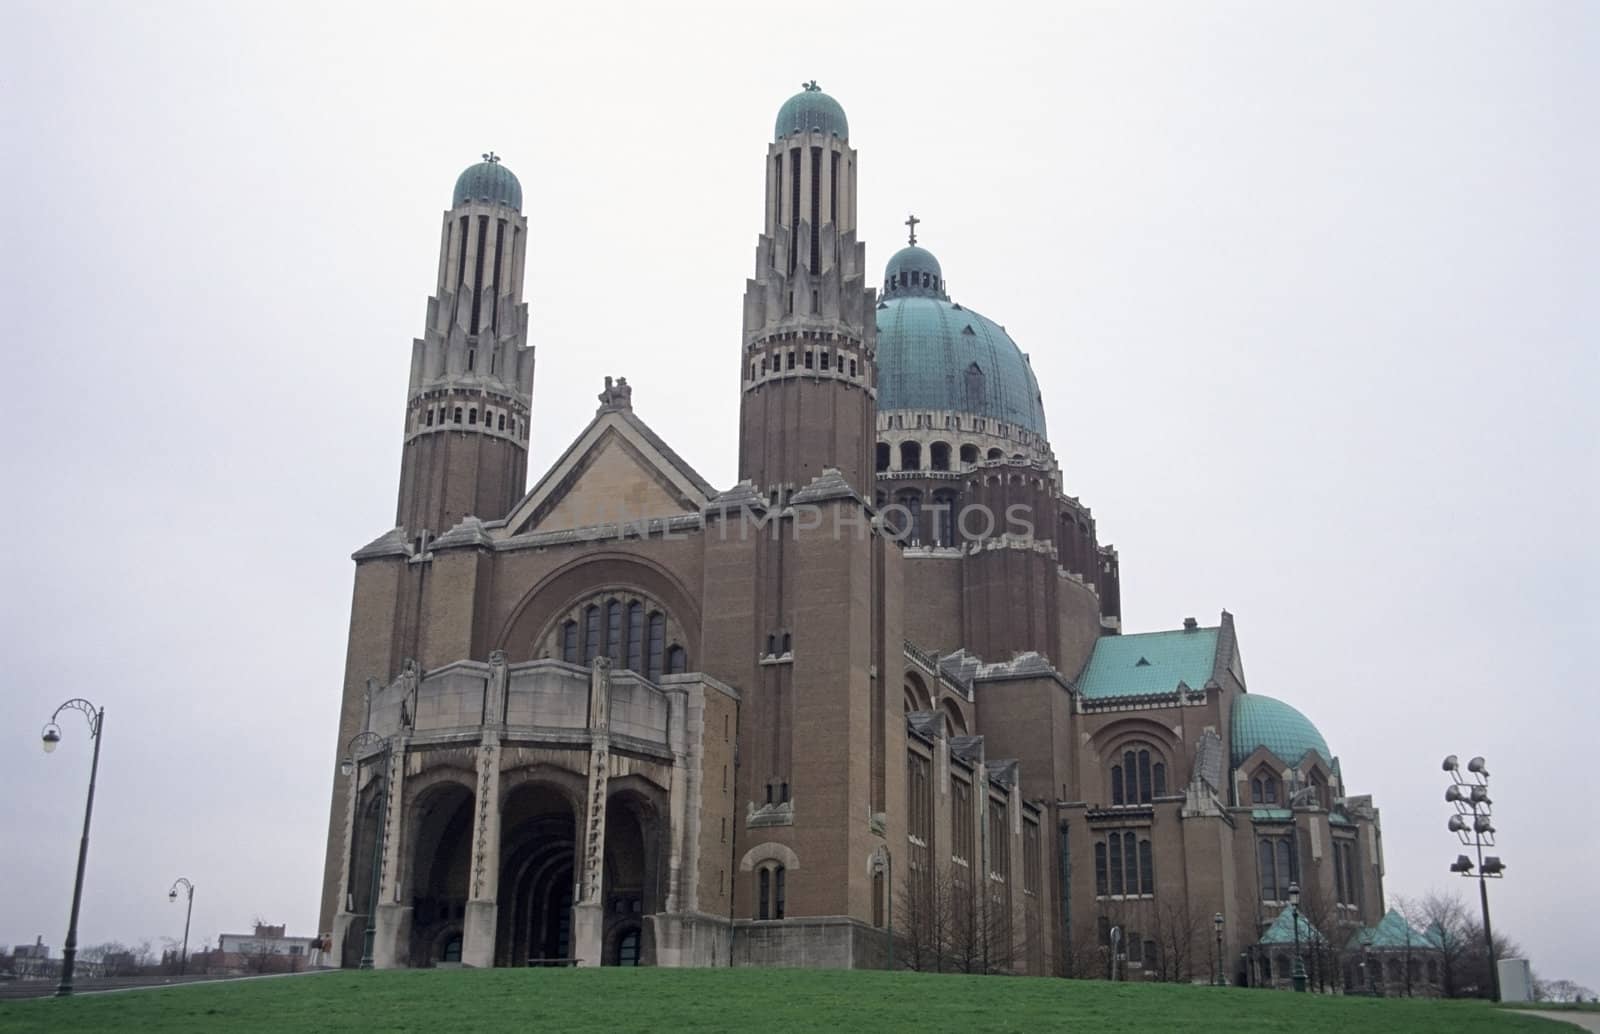 The Basilica of the Sacred Heart (Basilica of Koekelberg) in Brussels, Belgium.